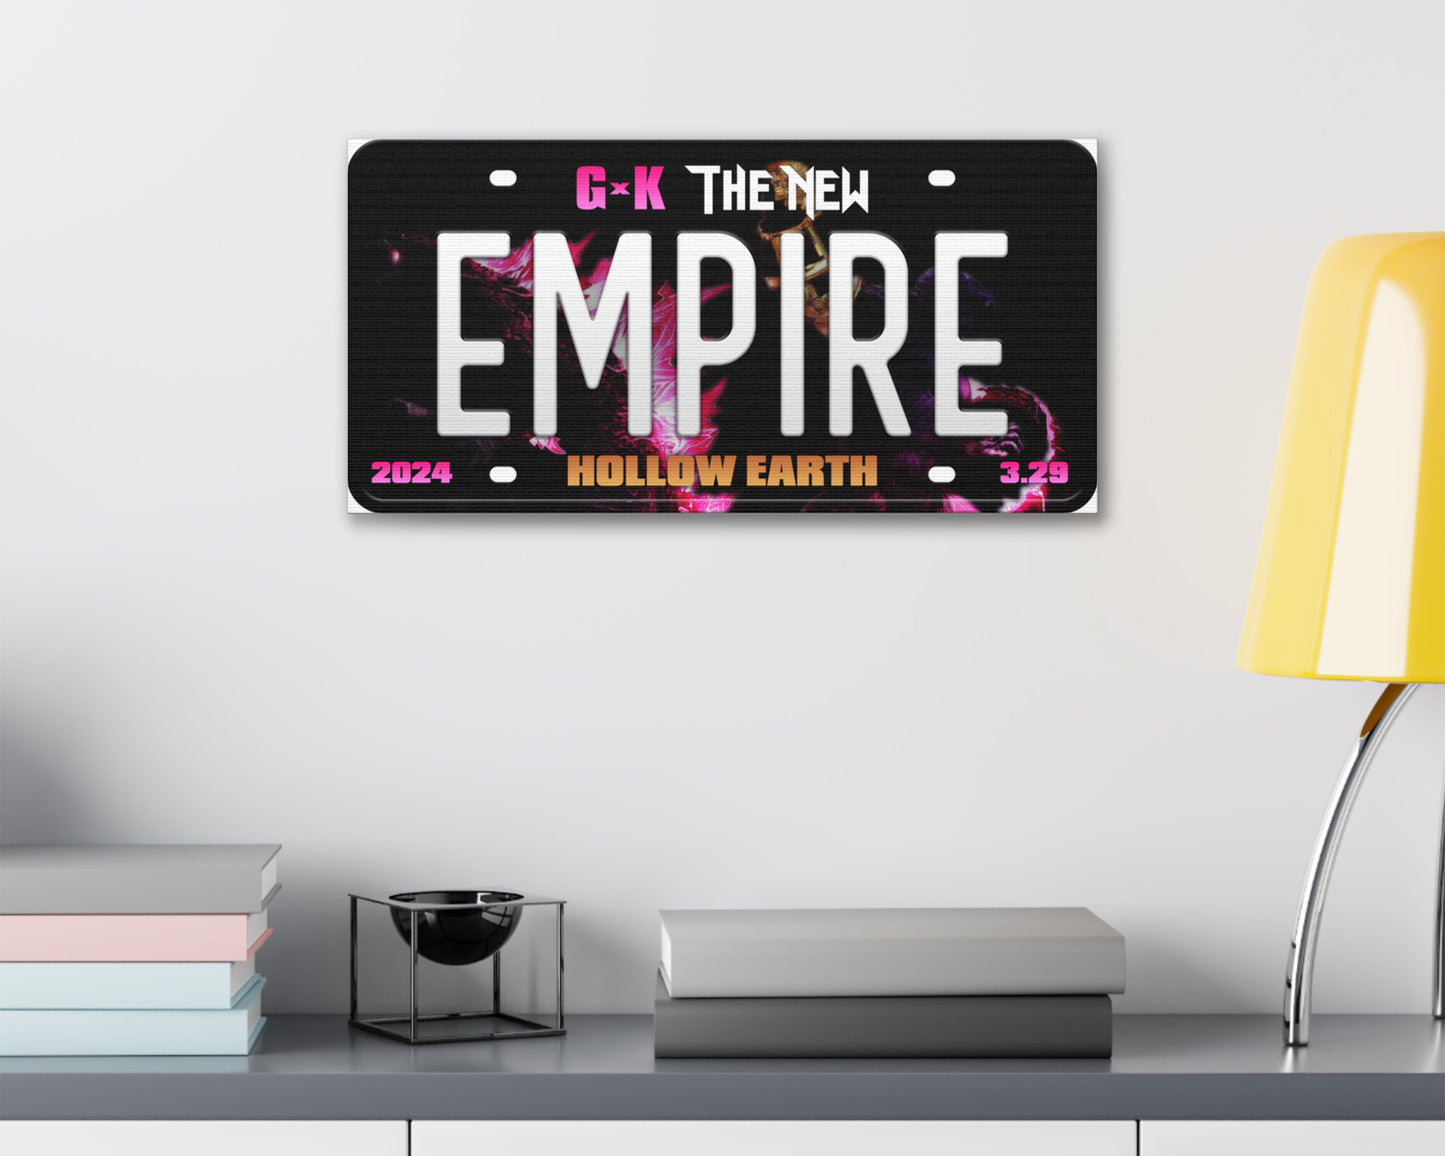 GxK: The New Empire (2024) movie canvas wall decor